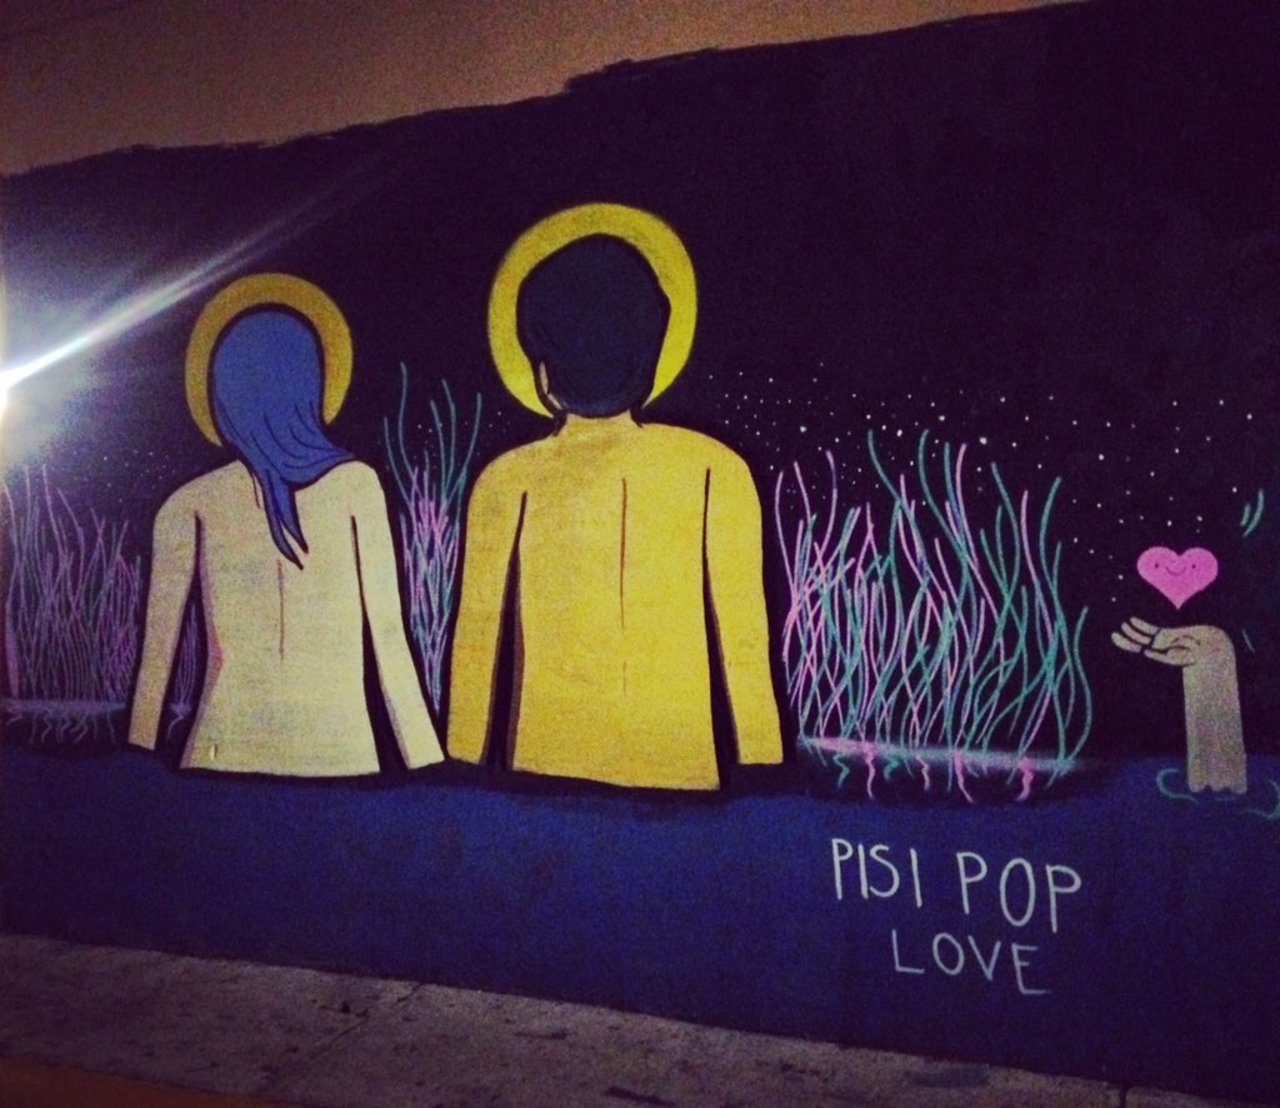 [Amar es atravesar juntos la oscuridad...] #graffiti #streetart #artderue #arteurbano 

https://instagram.com/p/9IaRHgB5jB/ https://t.co/q1B9FirhrW